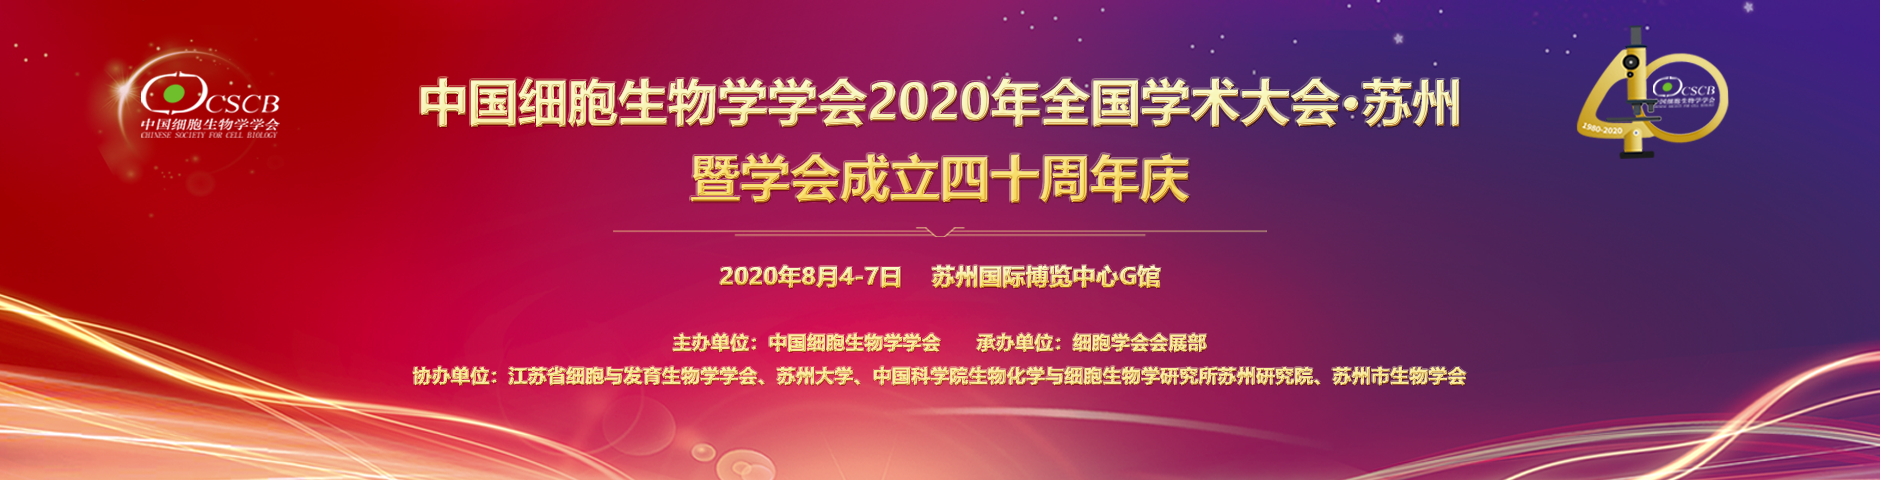 3868la银河总站携手GeneTex邀您参加中国细胞生物学学会2020年全国学术大会